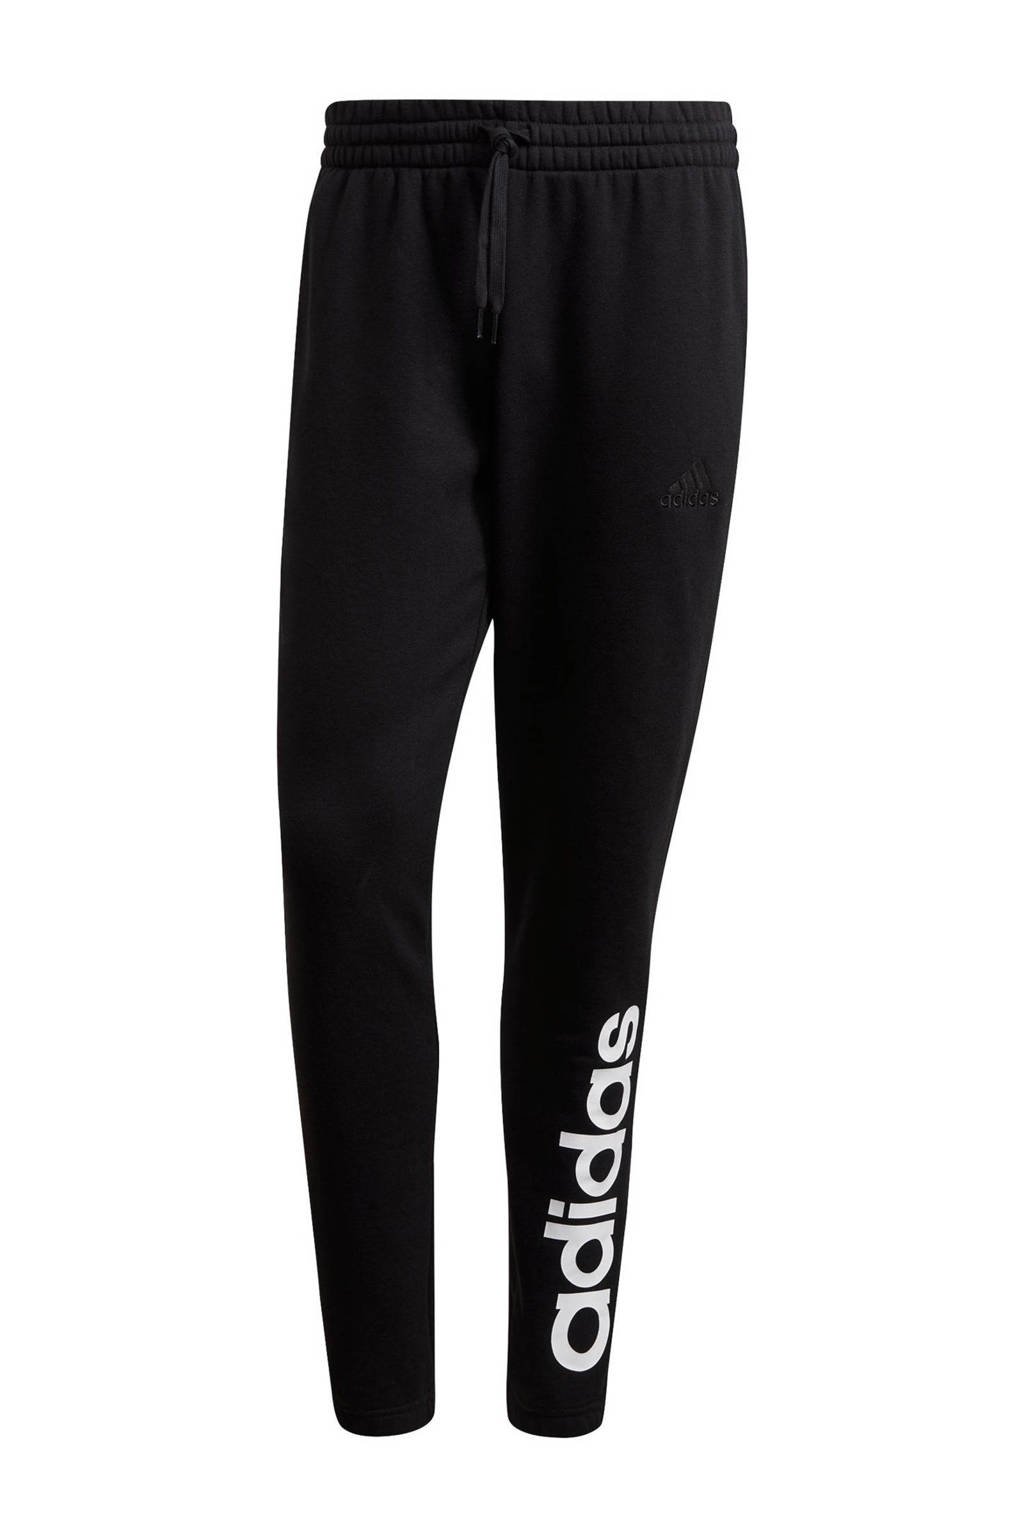 adidas Performance   joggingbroek zwart/wit